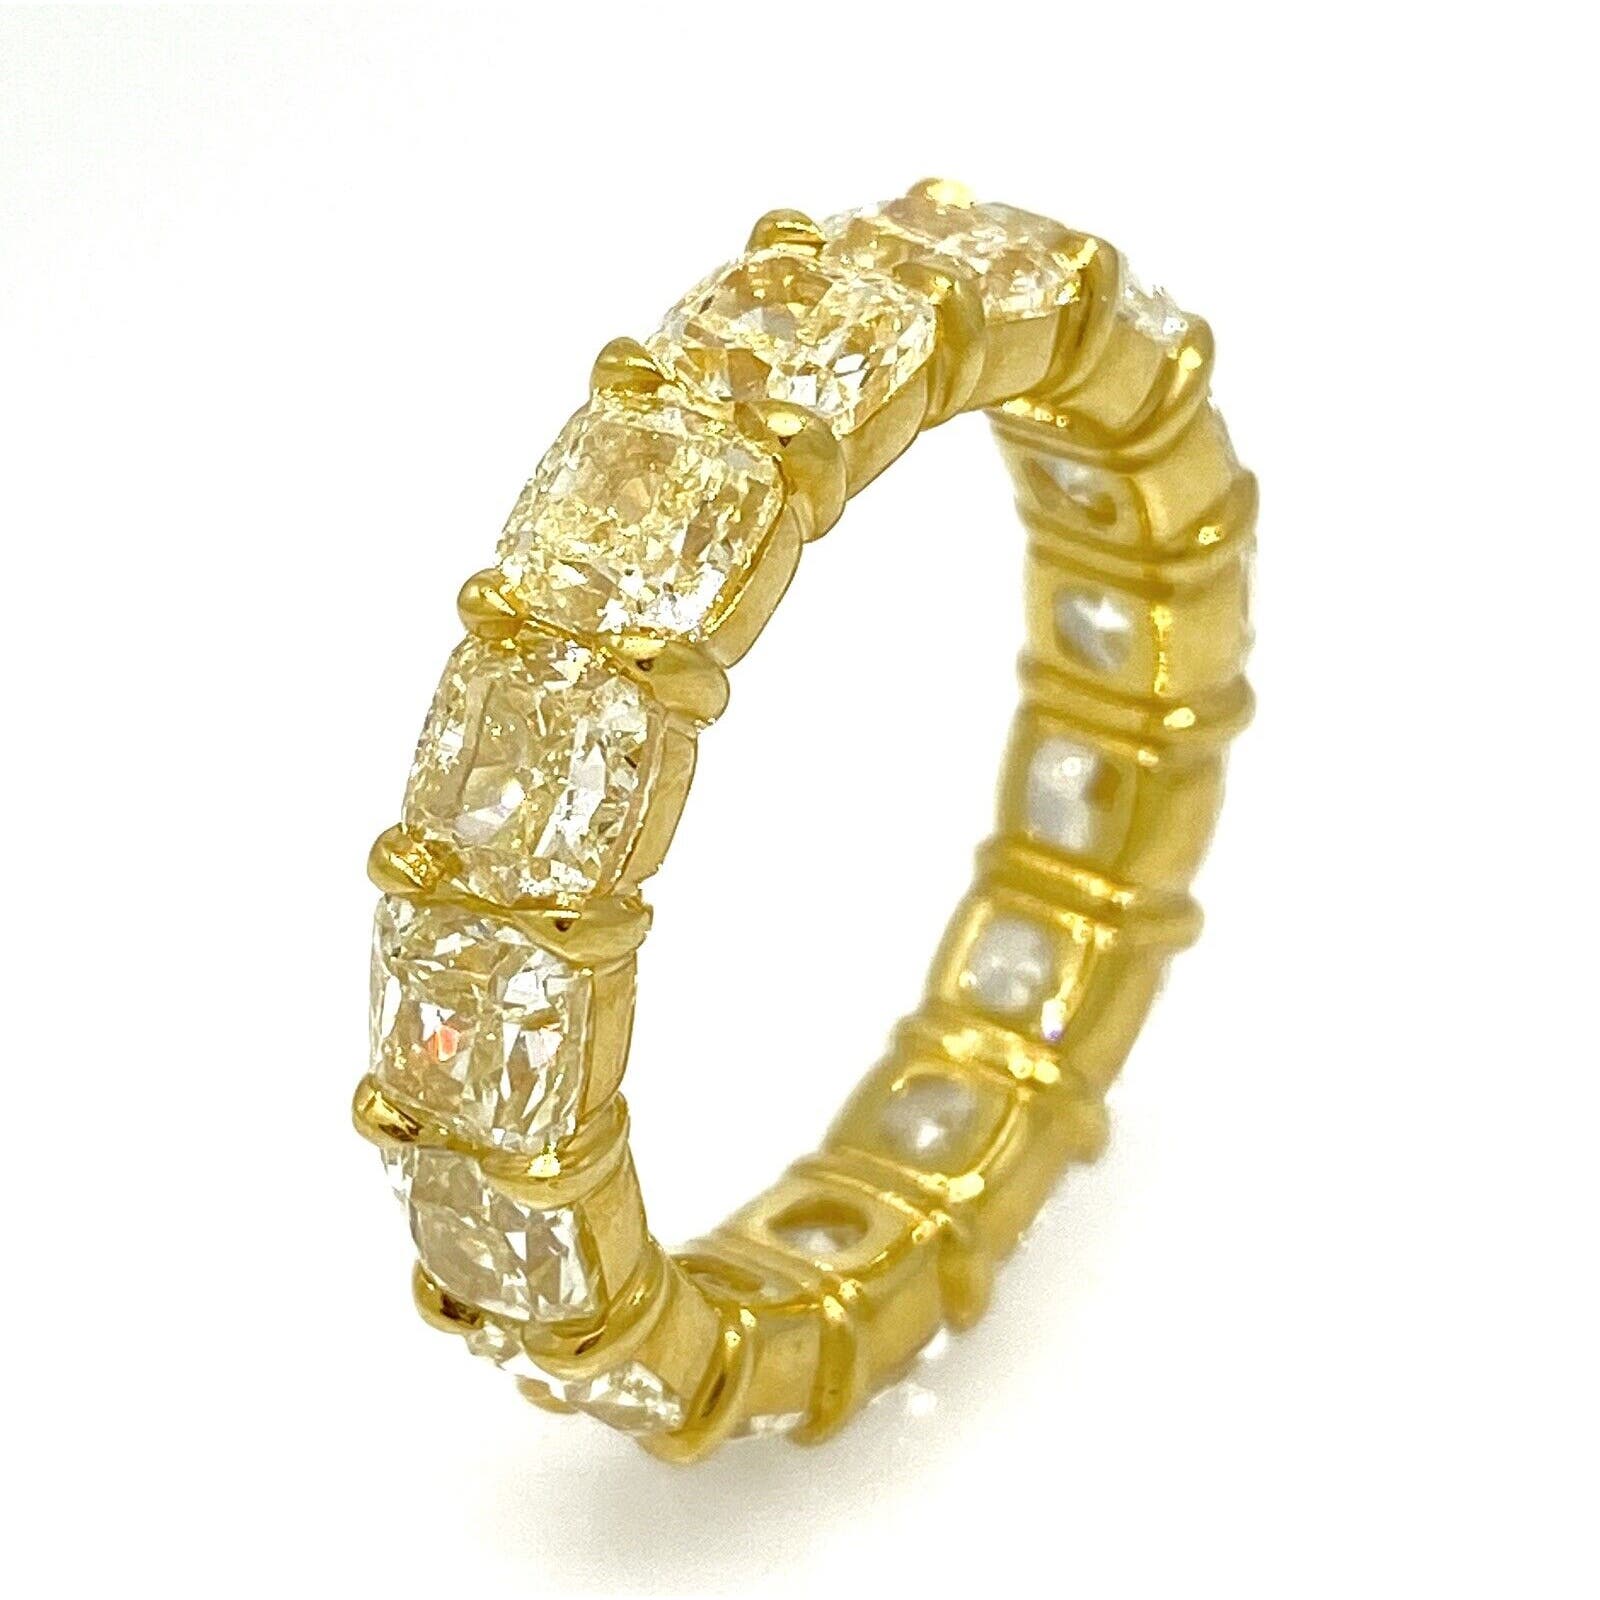 Light Yellow Cushion Diamond Eternity Ring 7.47cts in 18k Yellow Gold - HM2208RI